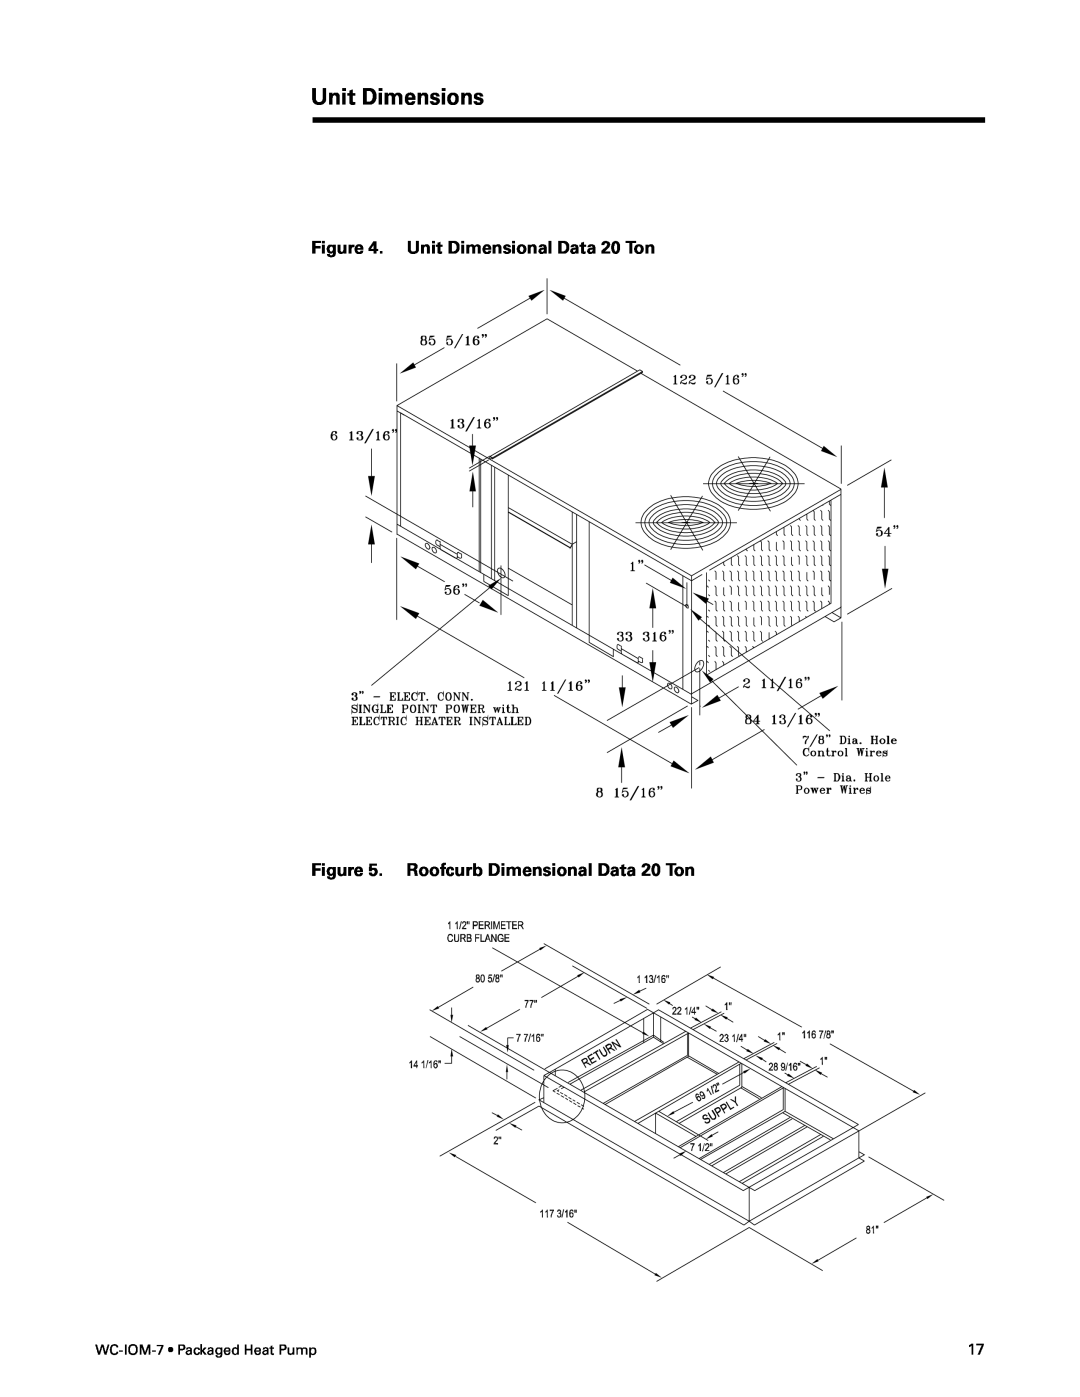 Trane WC-IOM-7 manual Unit Dimensional Data 20 Ton, Roofcurb Dimensional Data 20 Ton, Unit Dimensions 